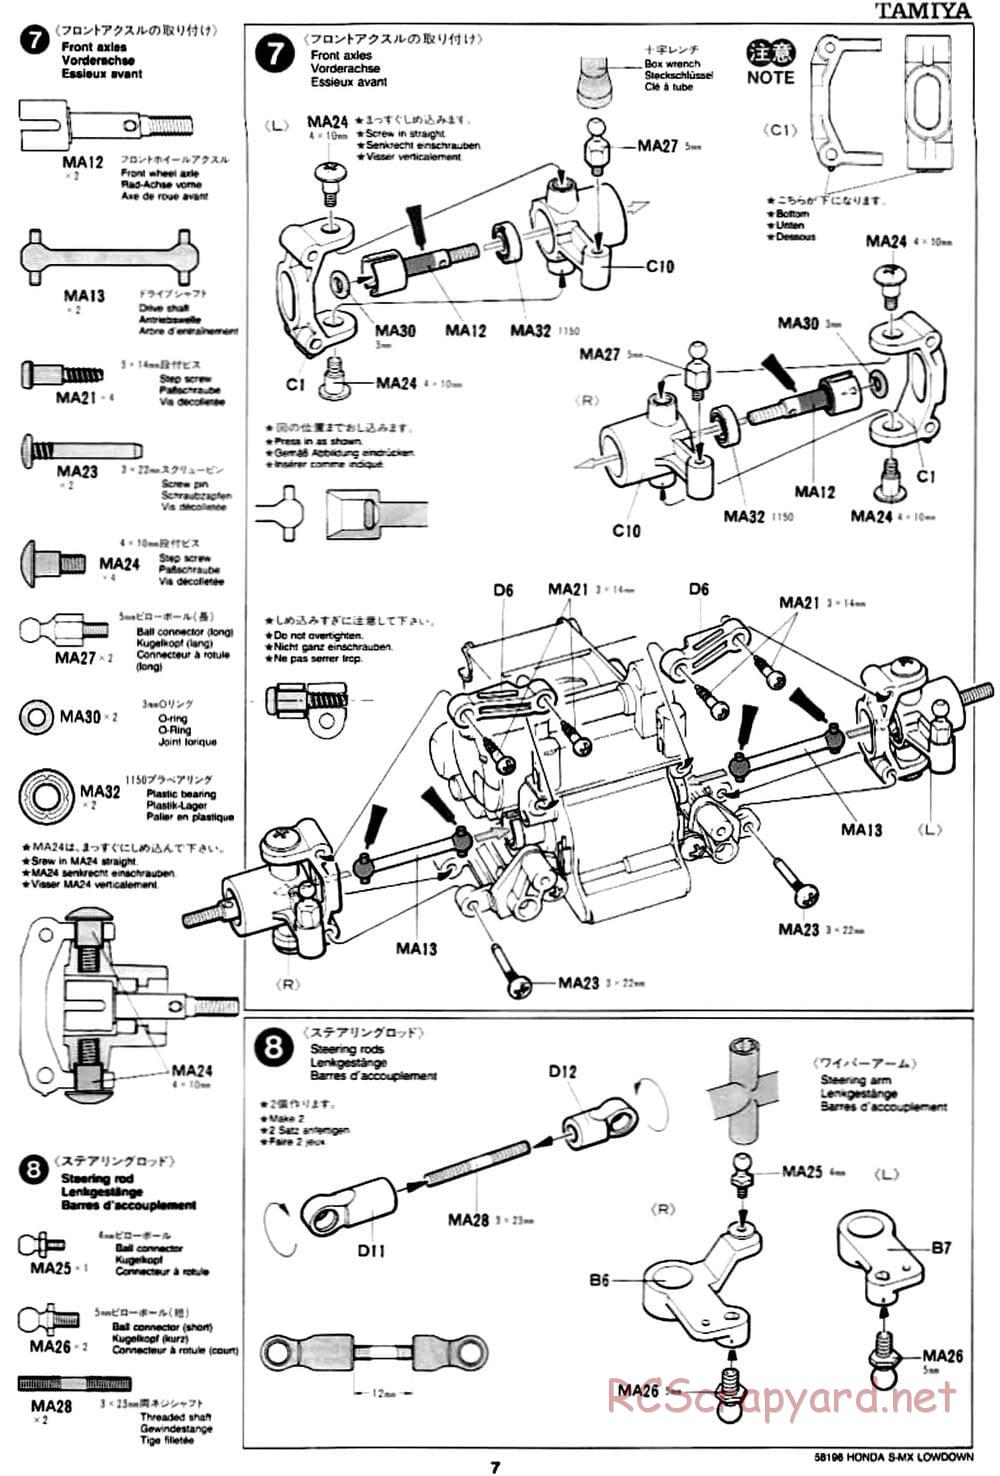 Tamiya - Honda S-MX Lowdown - M01 Chassis - Manual - Page 7